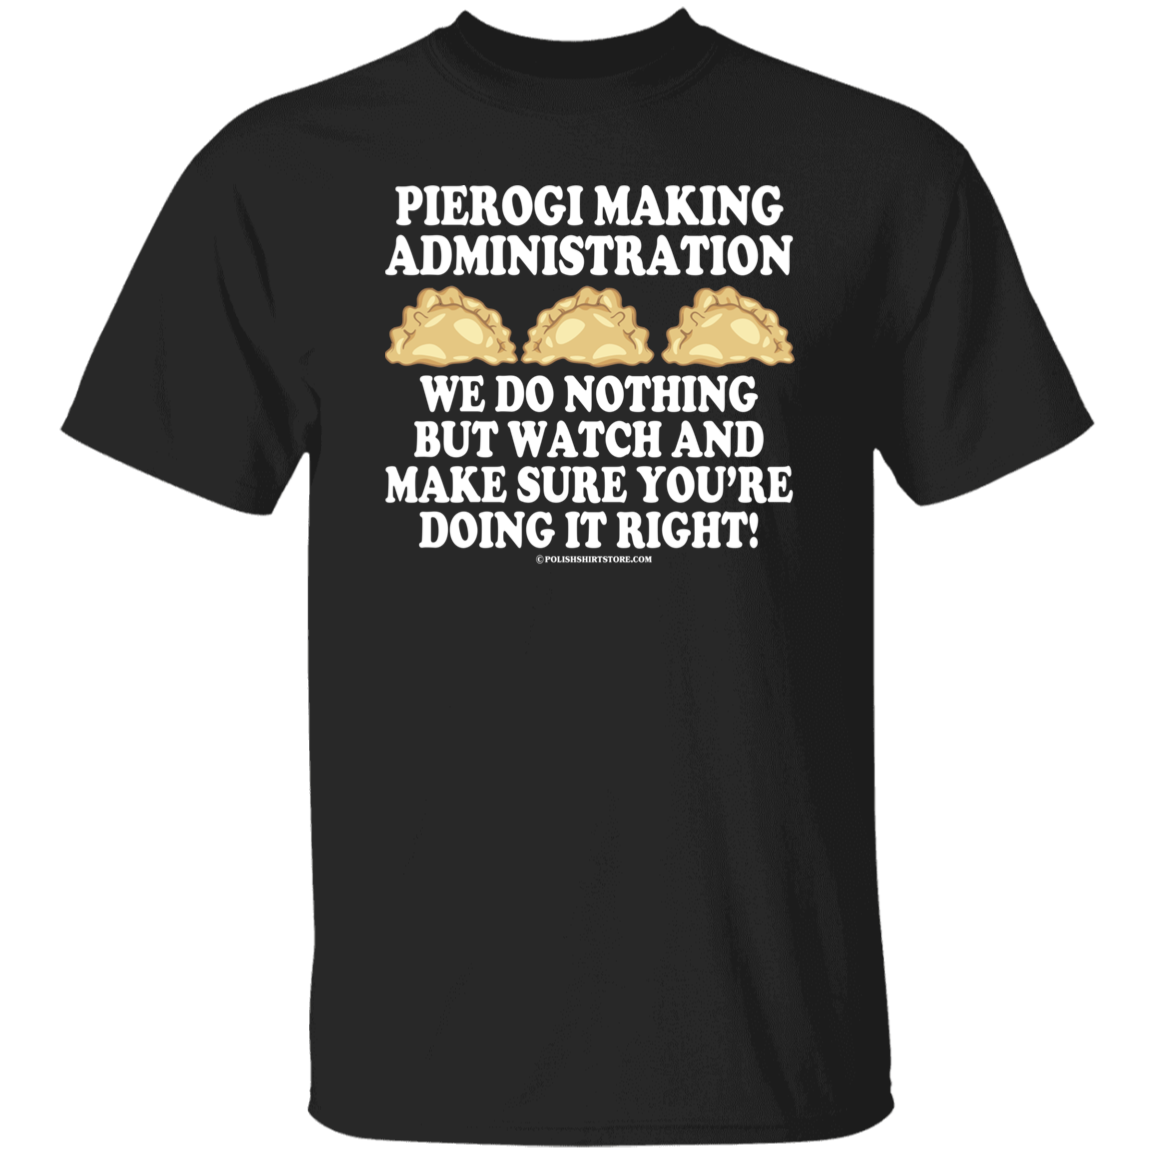 Pierogi Making Administration Apparel CustomCat G500 5.3 oz. T-Shirt Black S